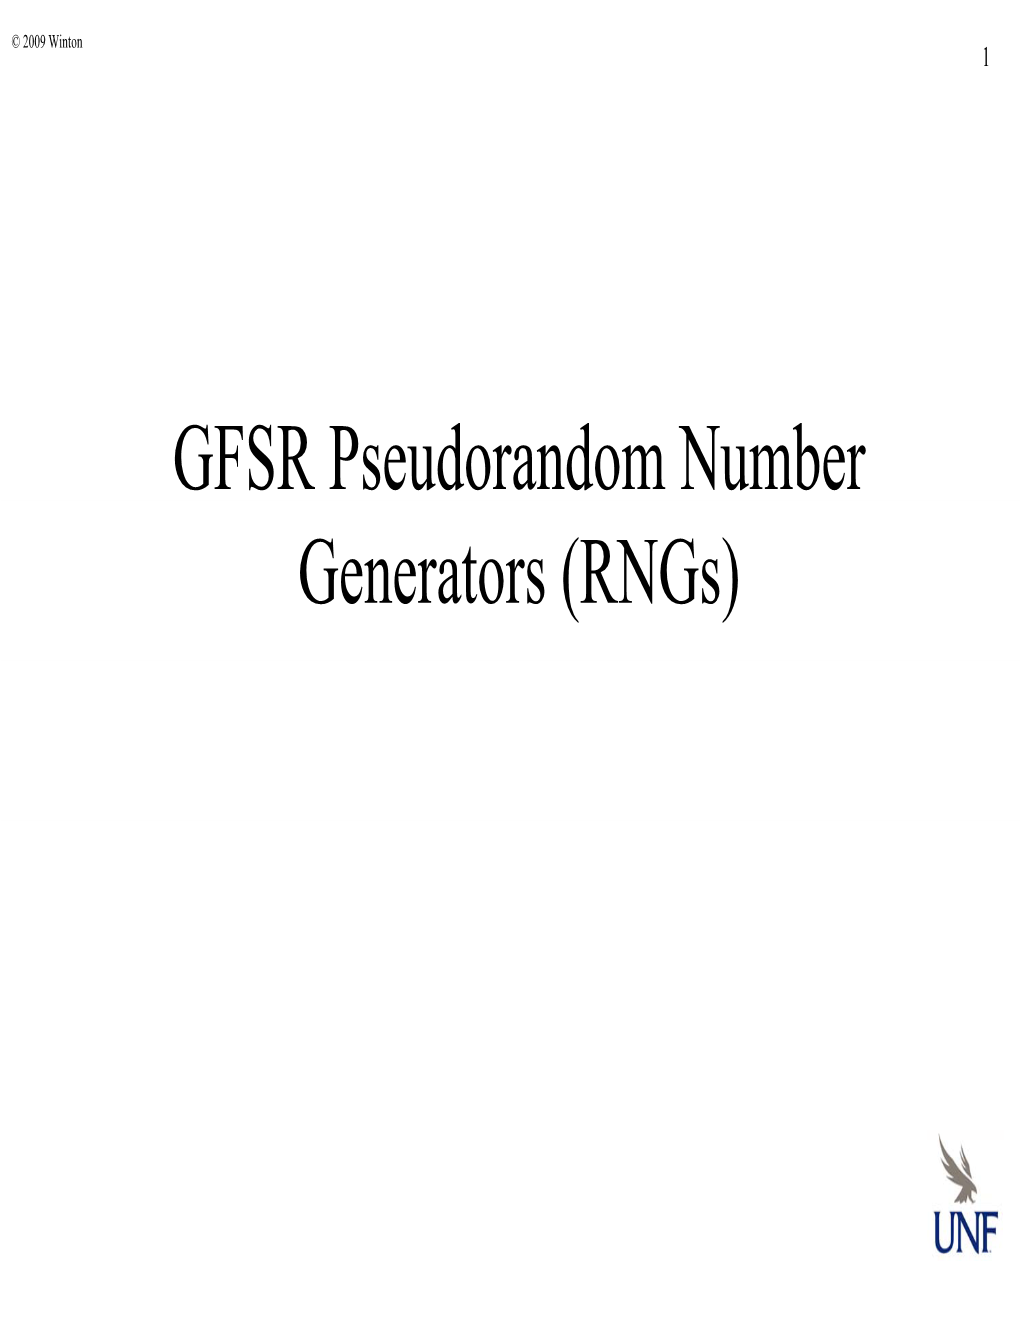 GFSR Pseudorandom Number Generators (Rngs) © 2009 Winton 2 VLP Rngs